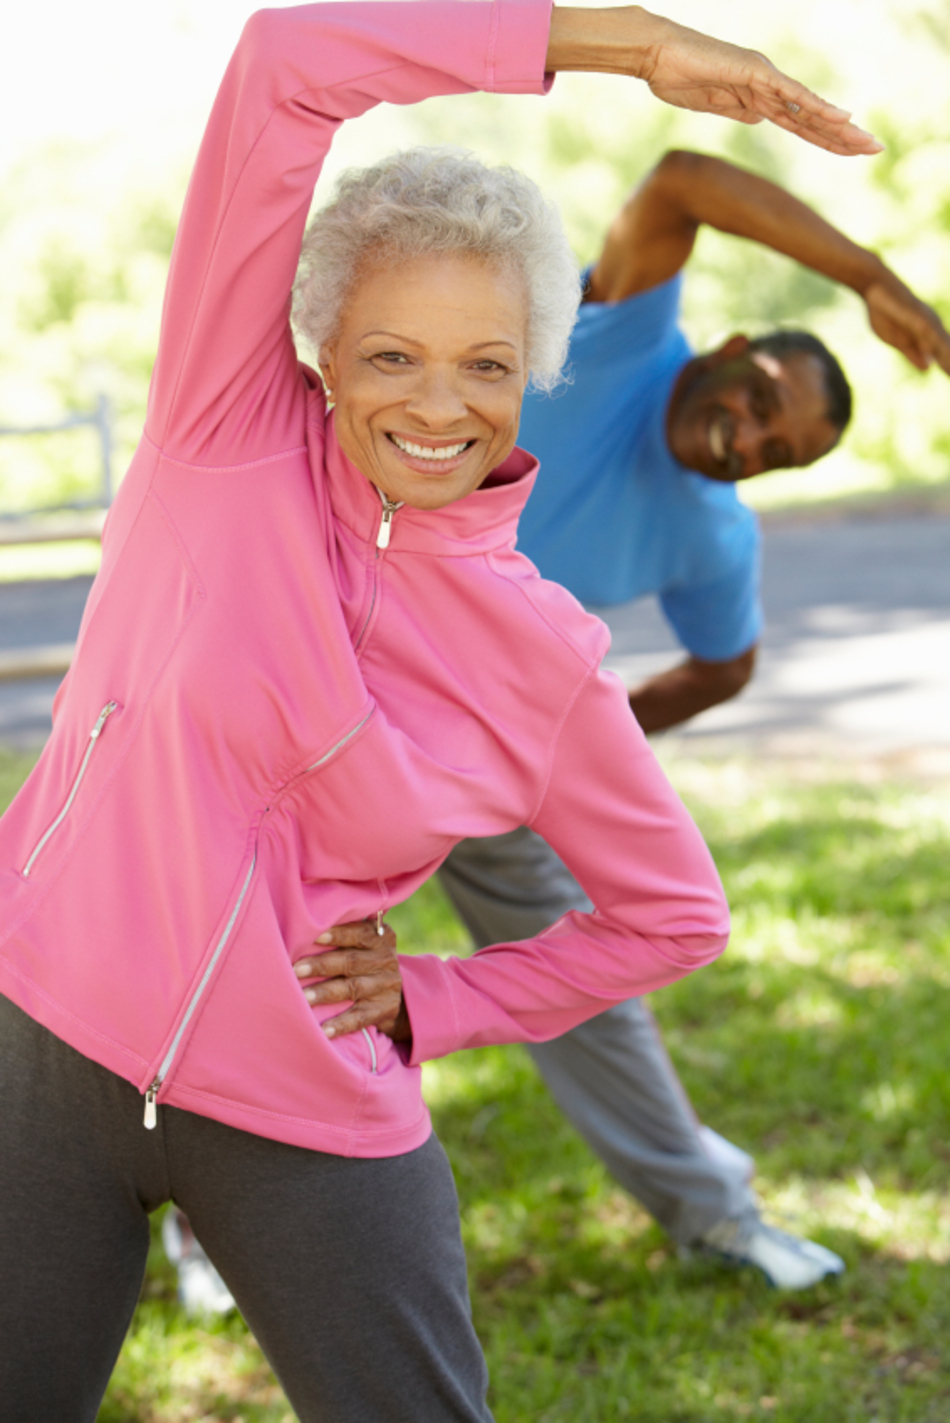 Exercises to Help Prevent Elderly Falls